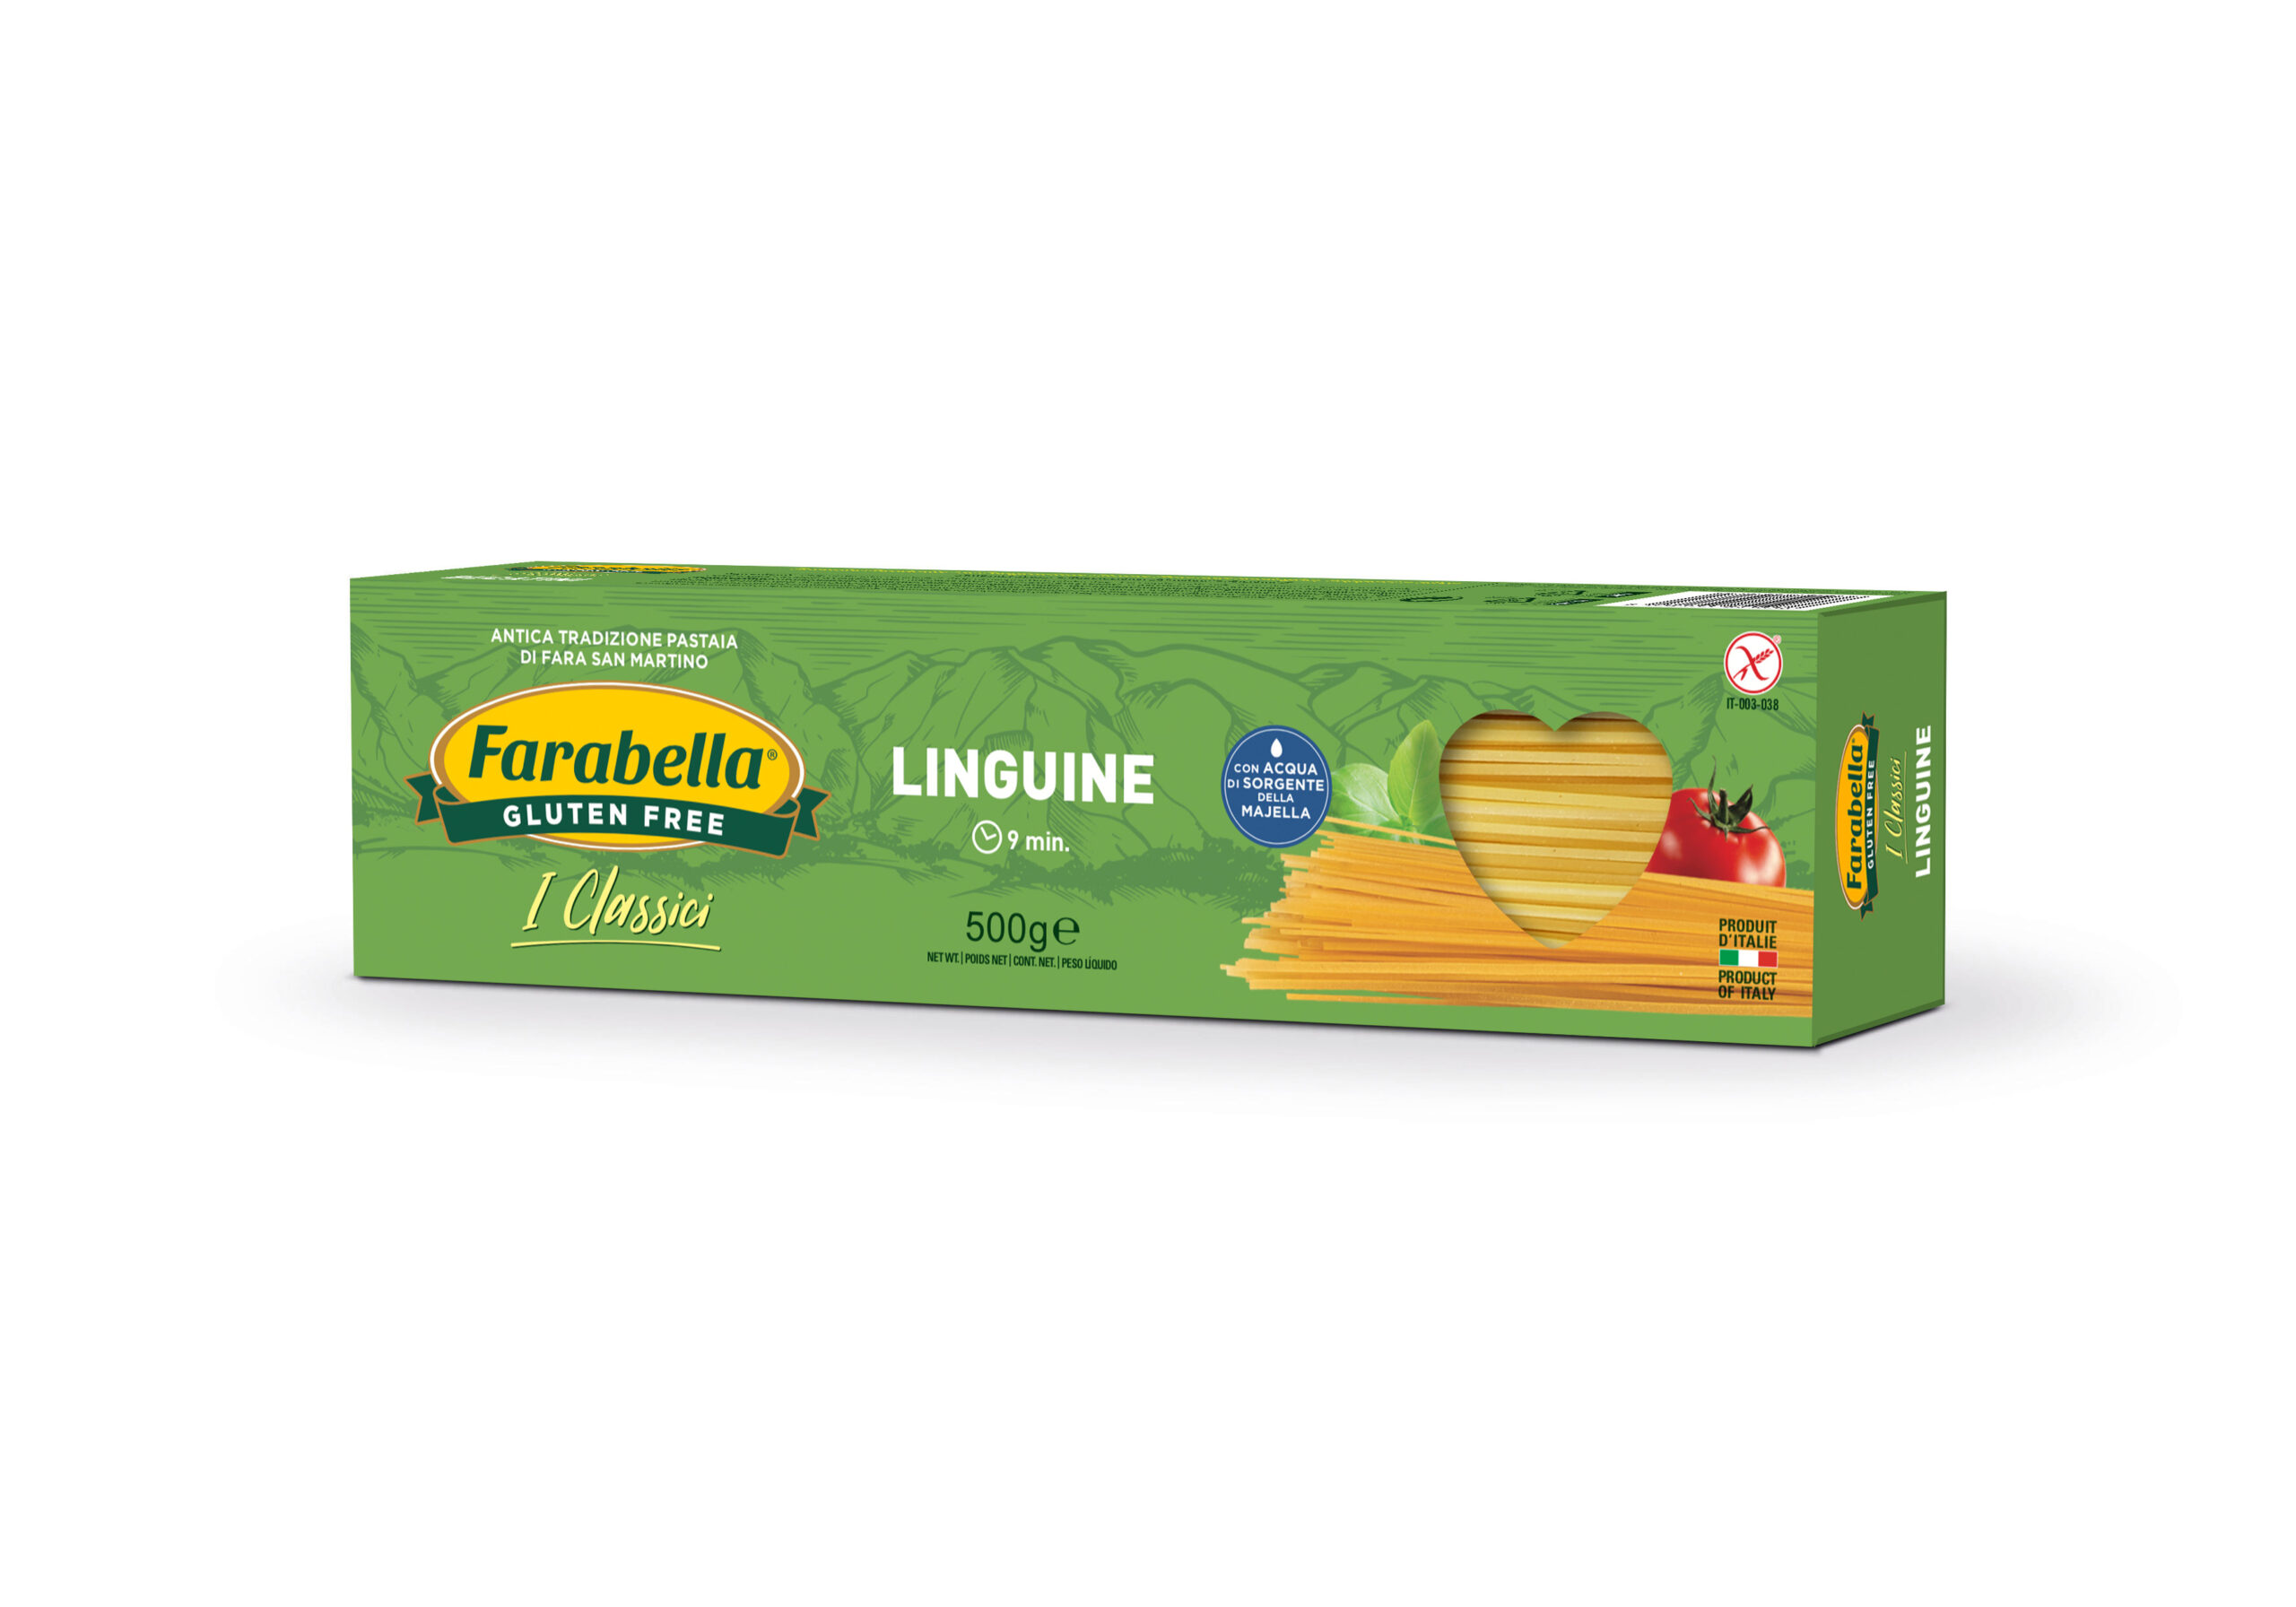 Farabella Linguine